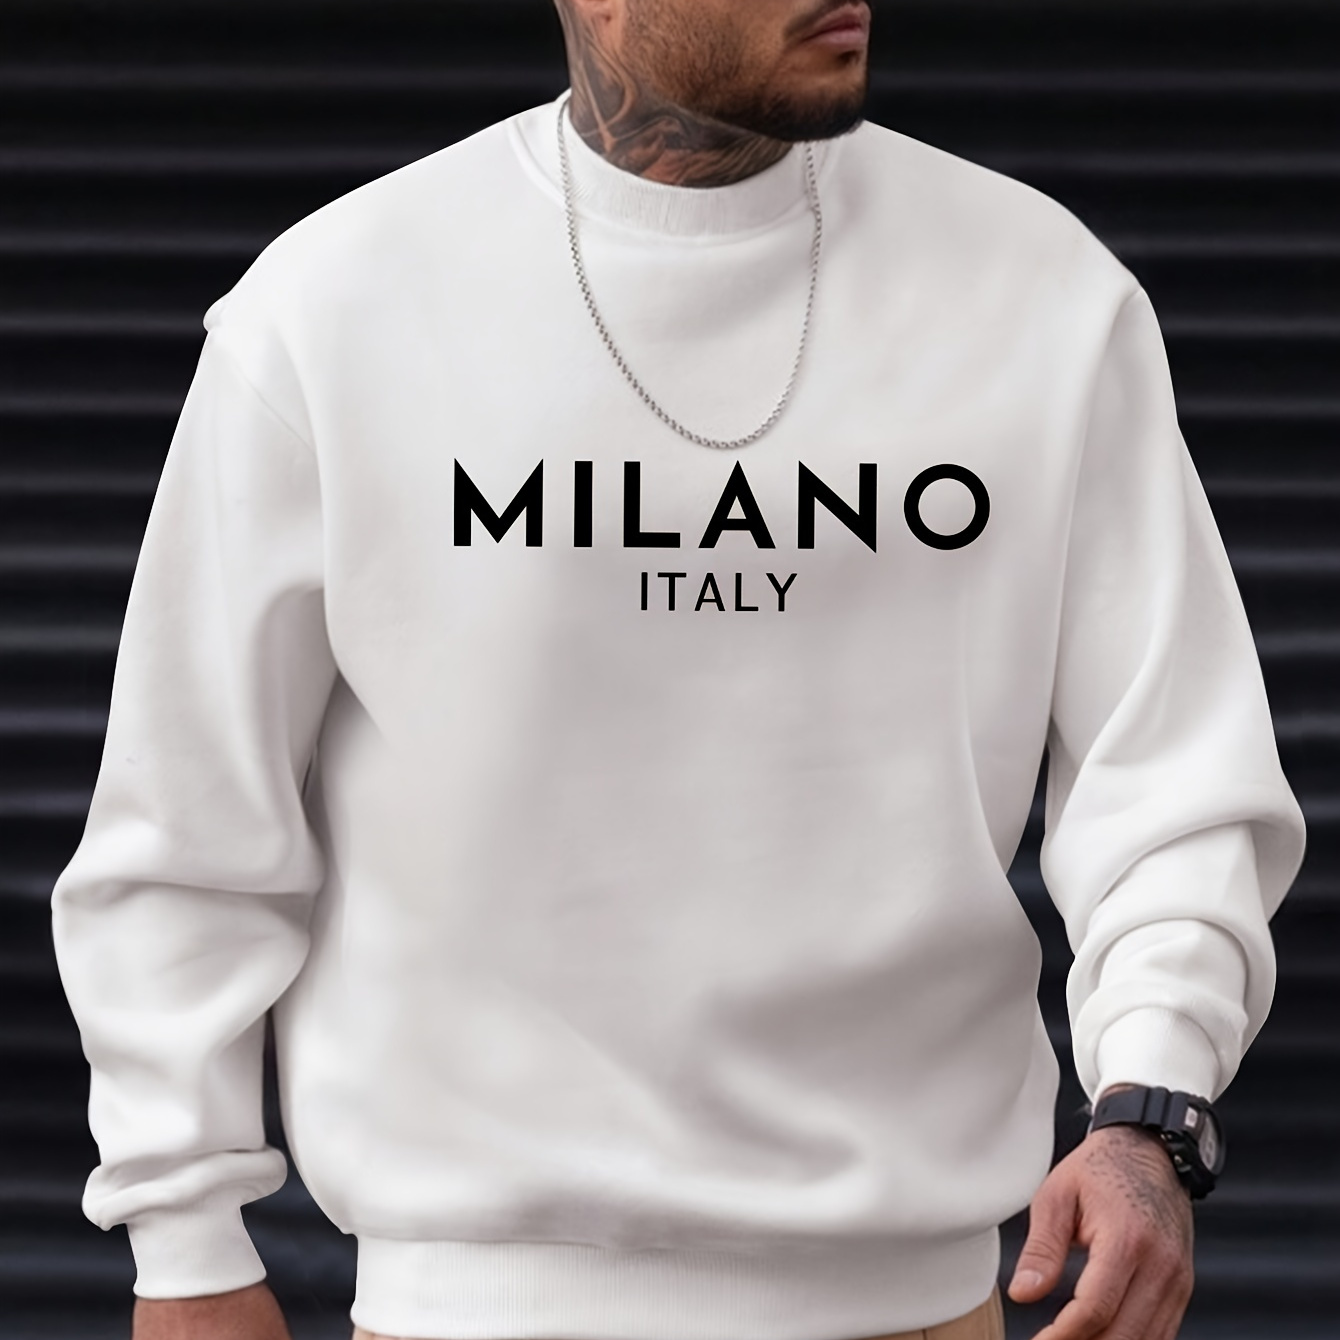 

Milano Italy Print Men's Long Sleeve Crew Neck Sweatshirt, Trendy Pullover Sweatshirt, Casual Comfortable Versatile Top For Spring & Autumn, Outdoor Sports